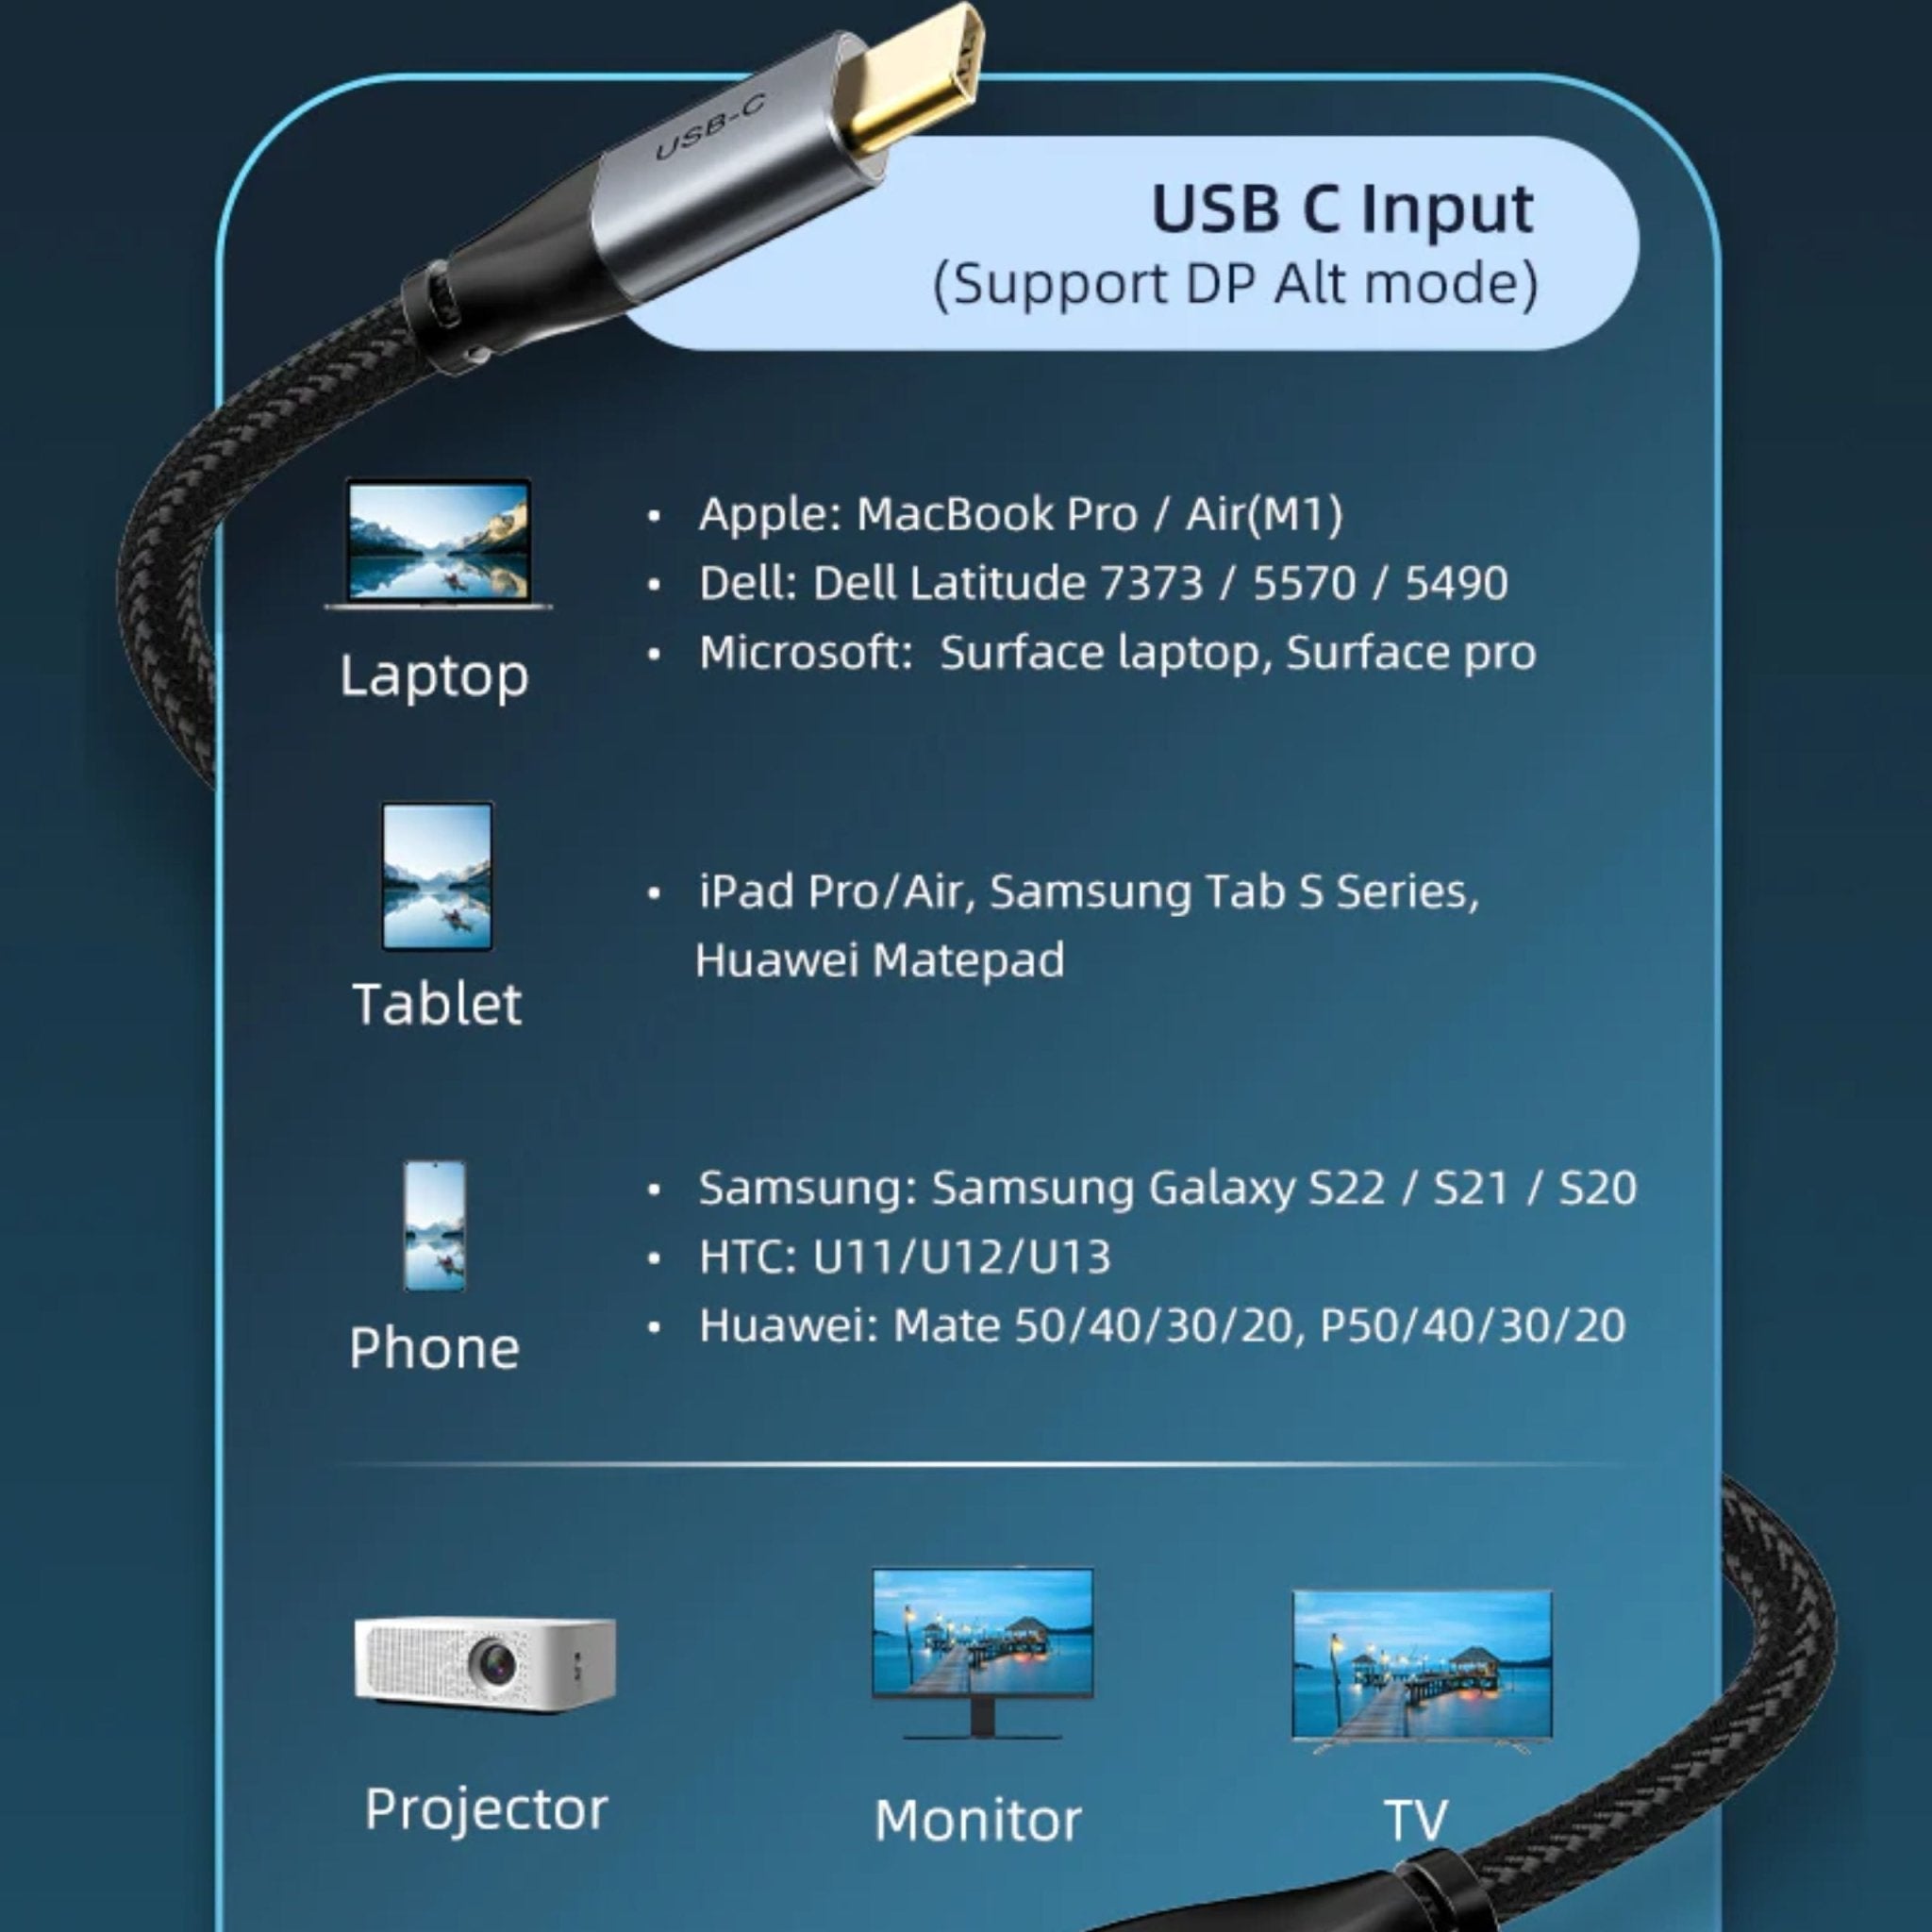 Blupebble USB-C to HDMI Cable - Black